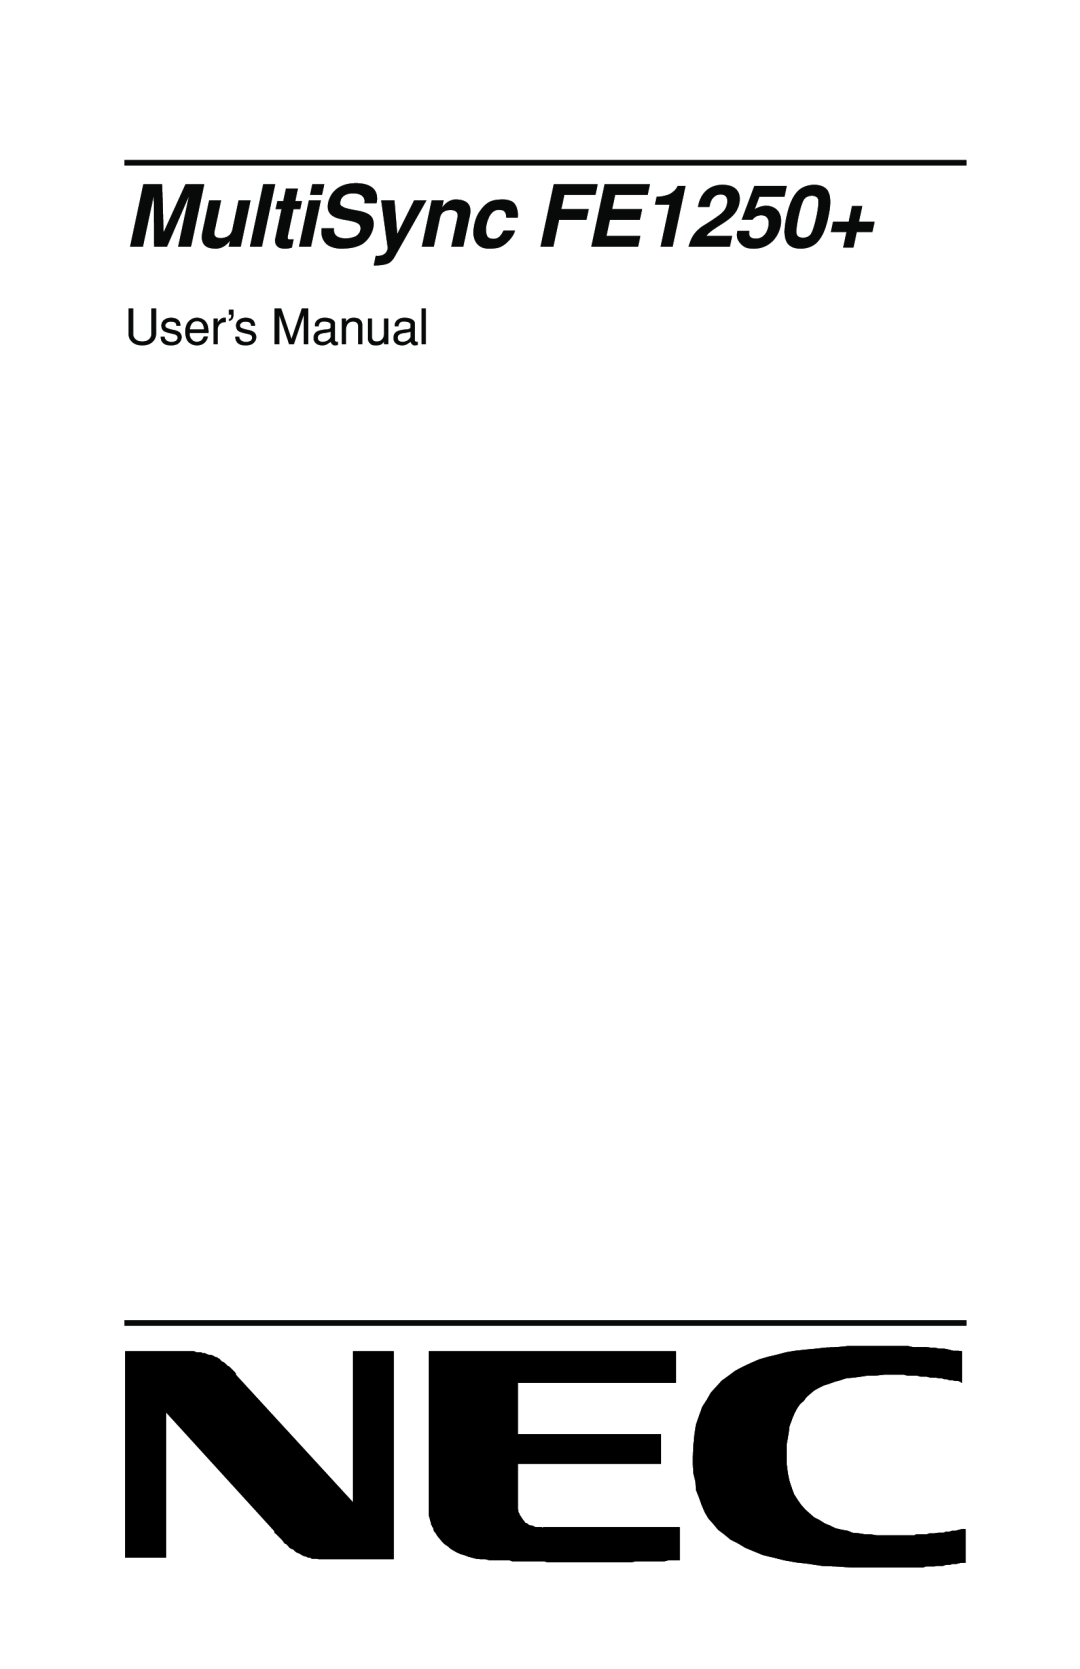 NEC user manual MultiSync FE1250+, User’s Manual 